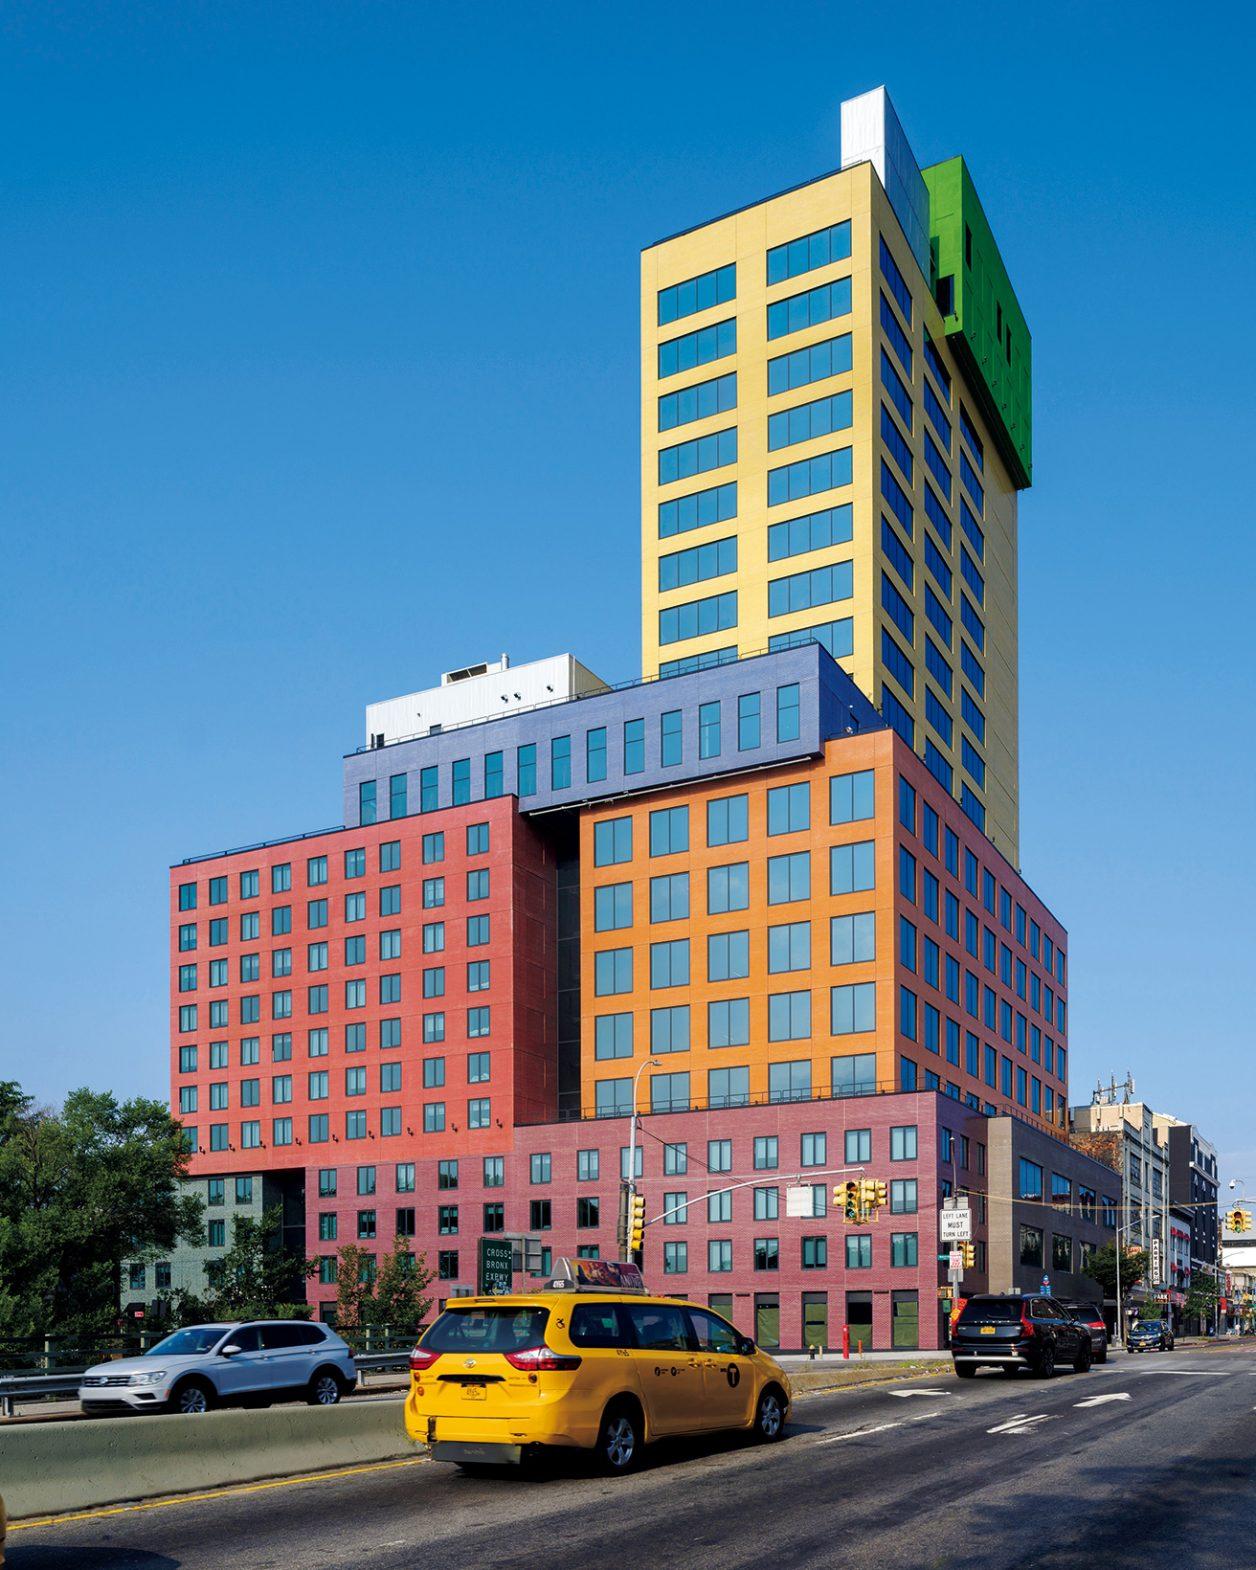 MVRDVが設計したカラフルなホテルがNYに出現。